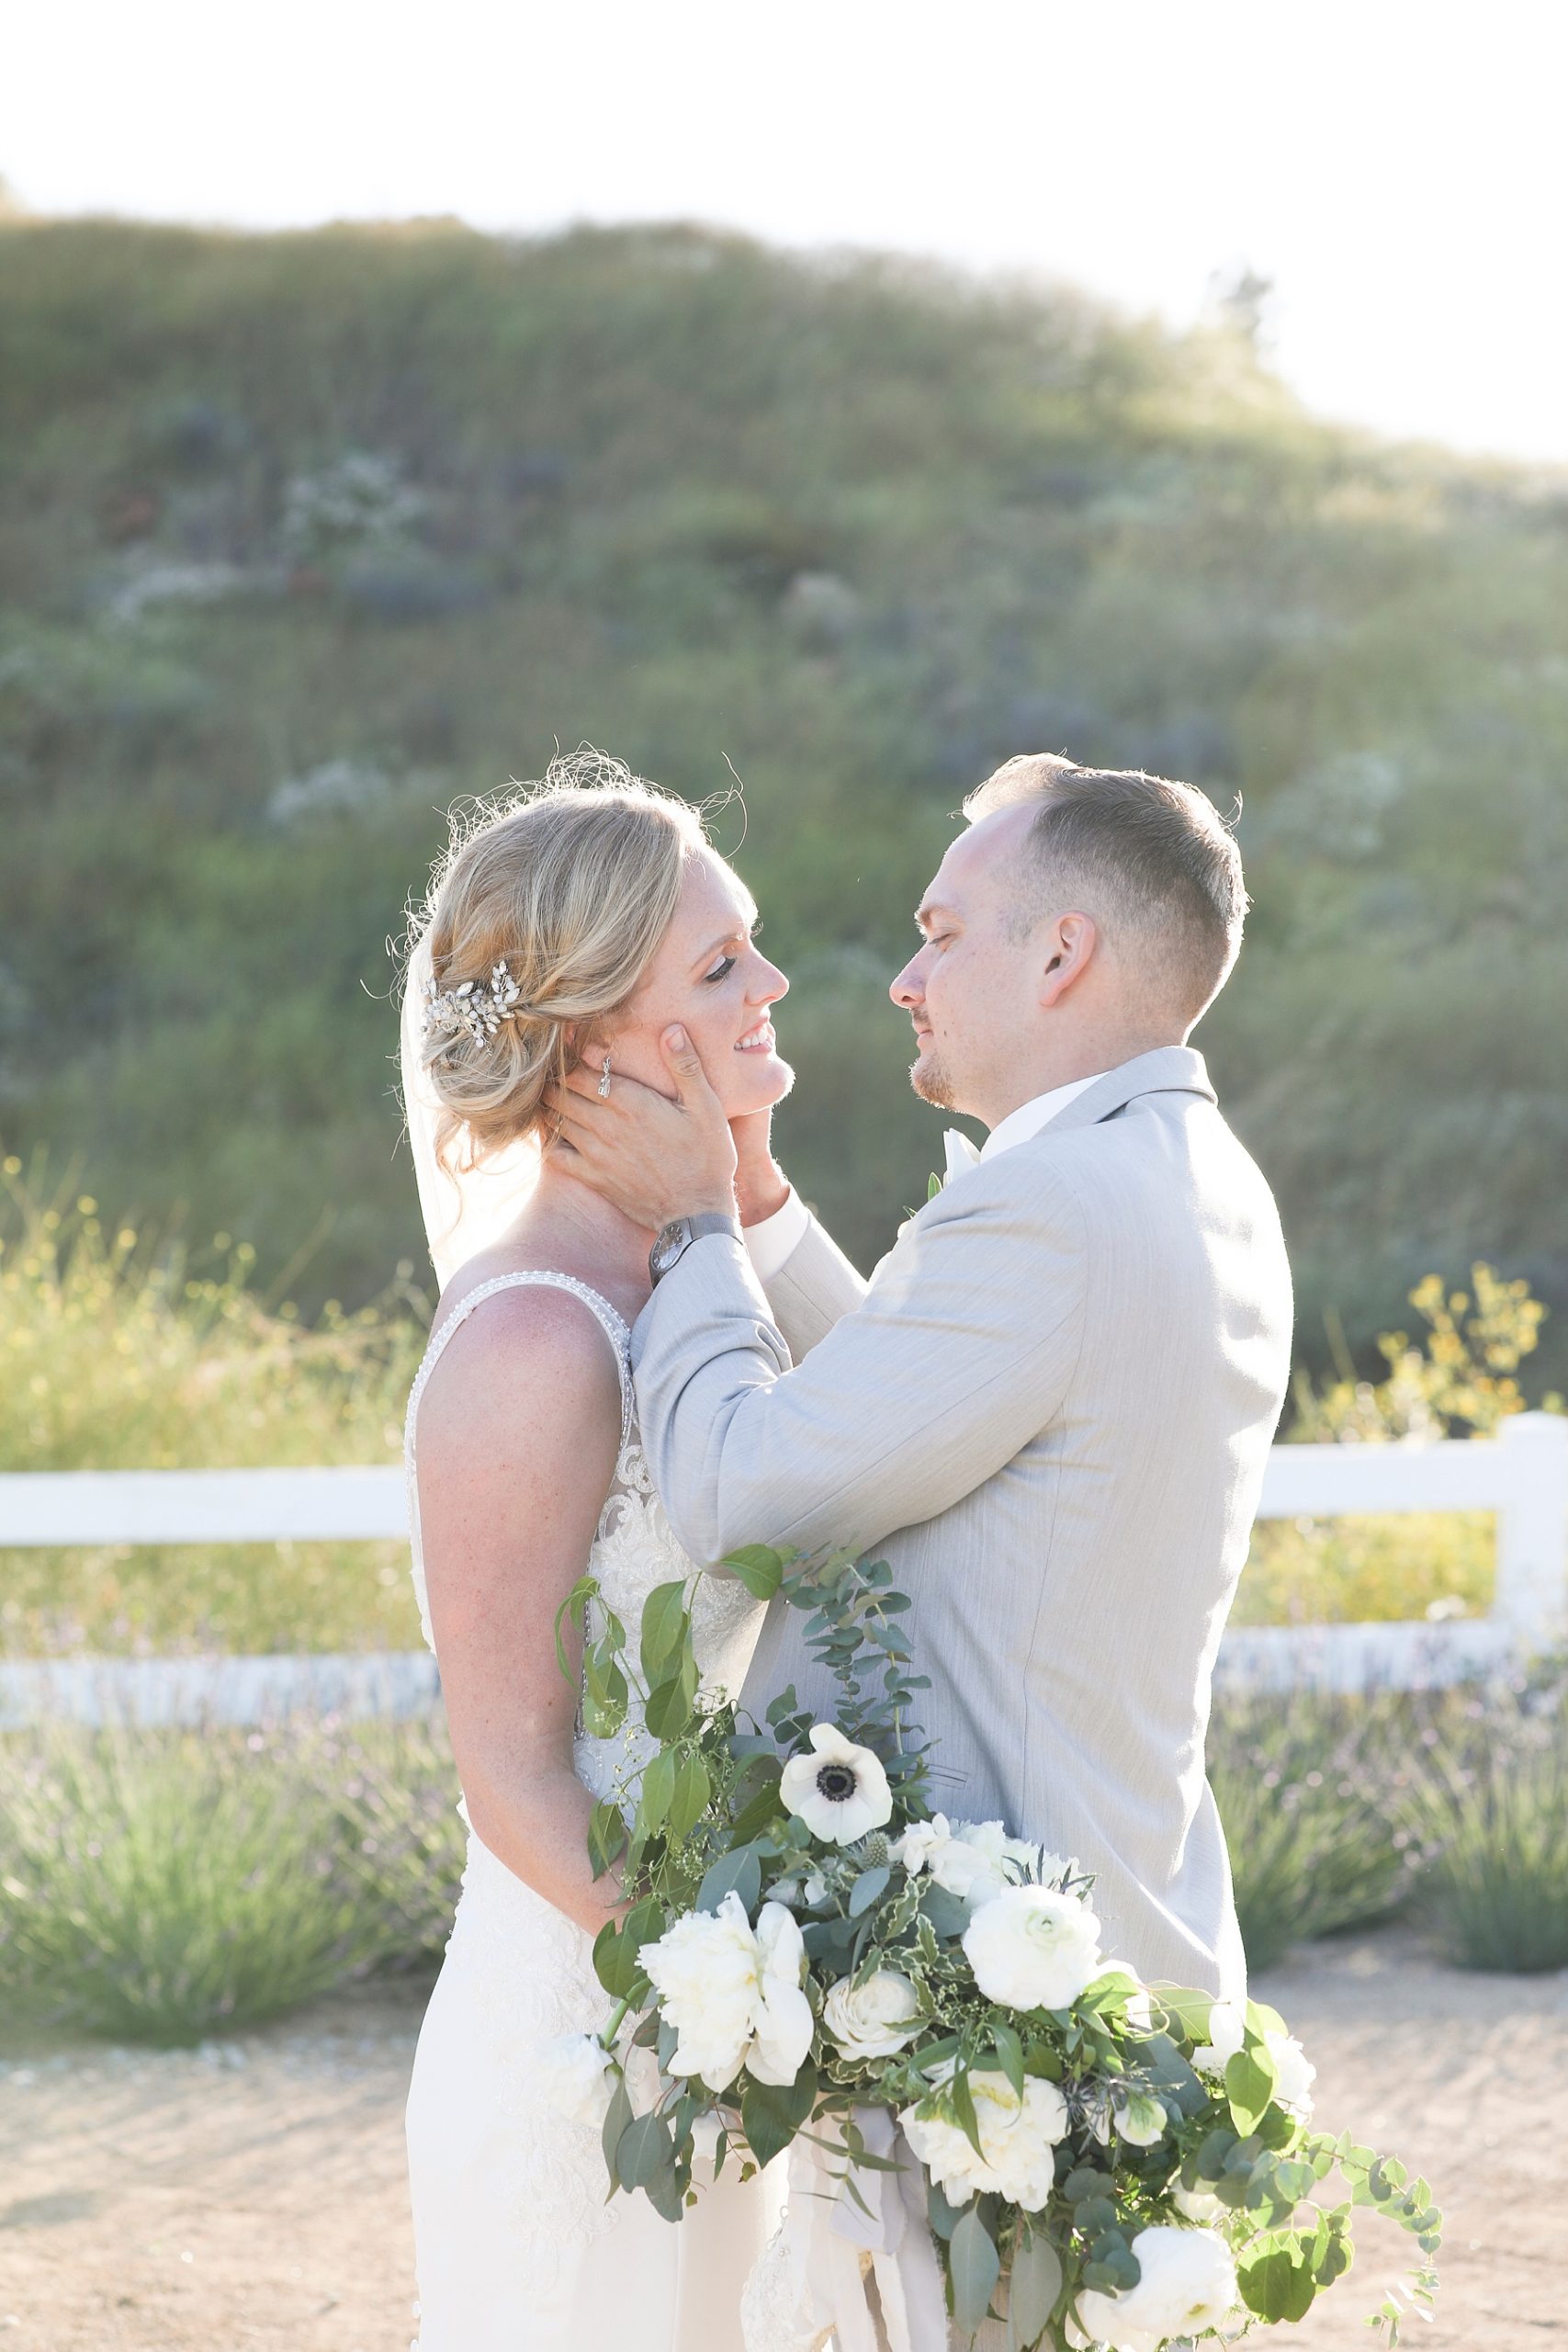 Randi Michelle Weddings photographs bride and groom at Providence Plateau